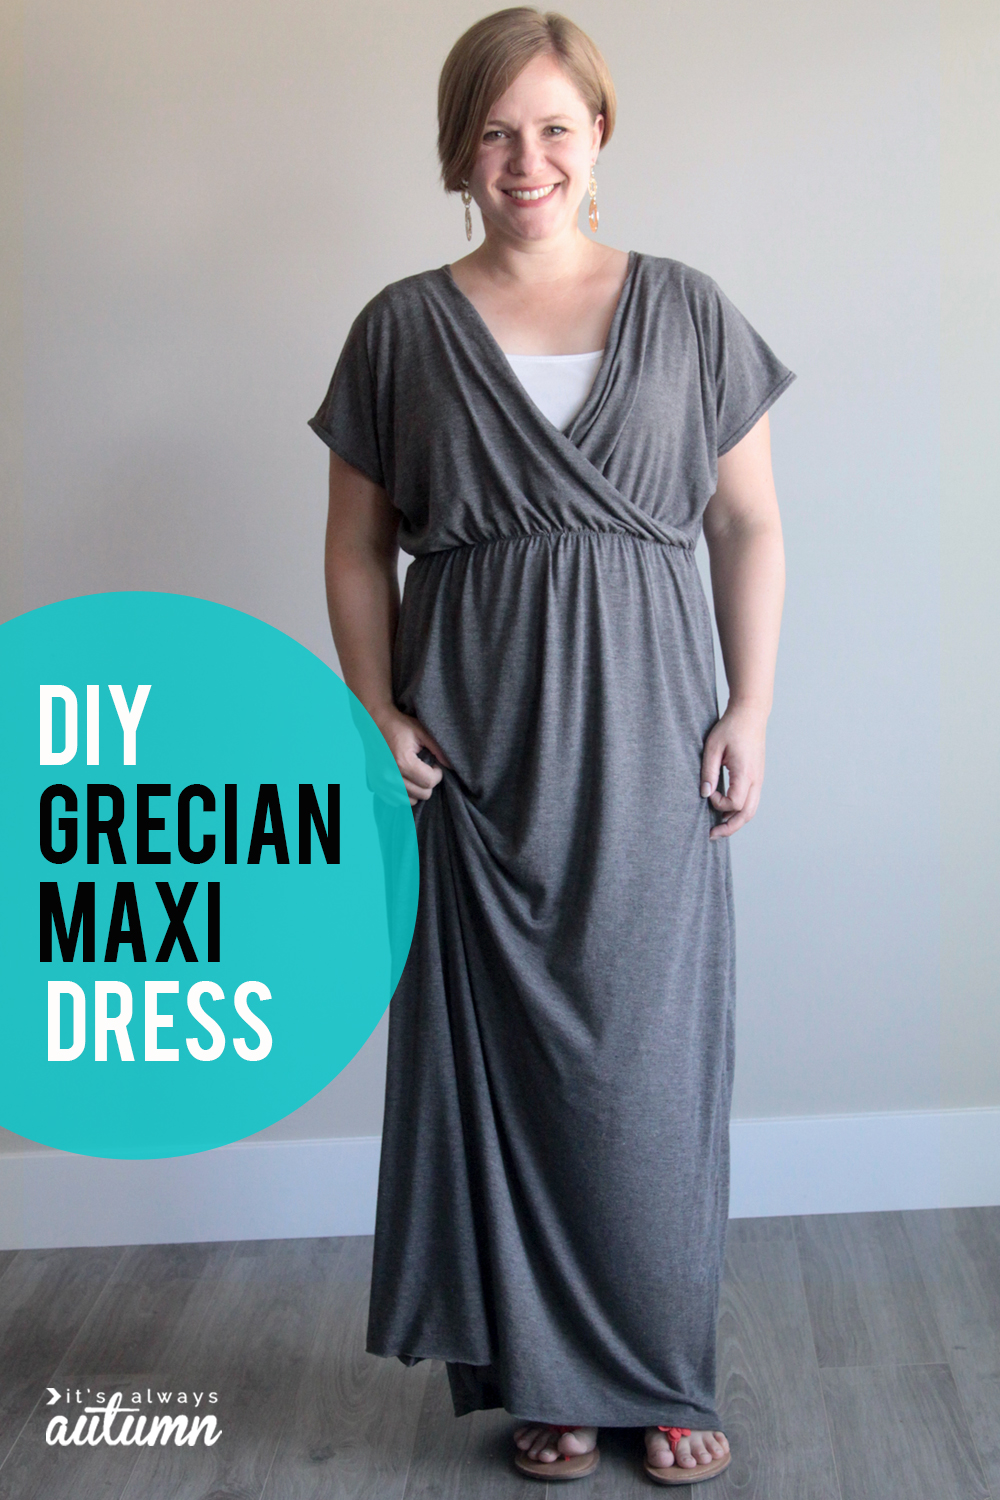 DIY Grecian maxi dress sewing tutorial.